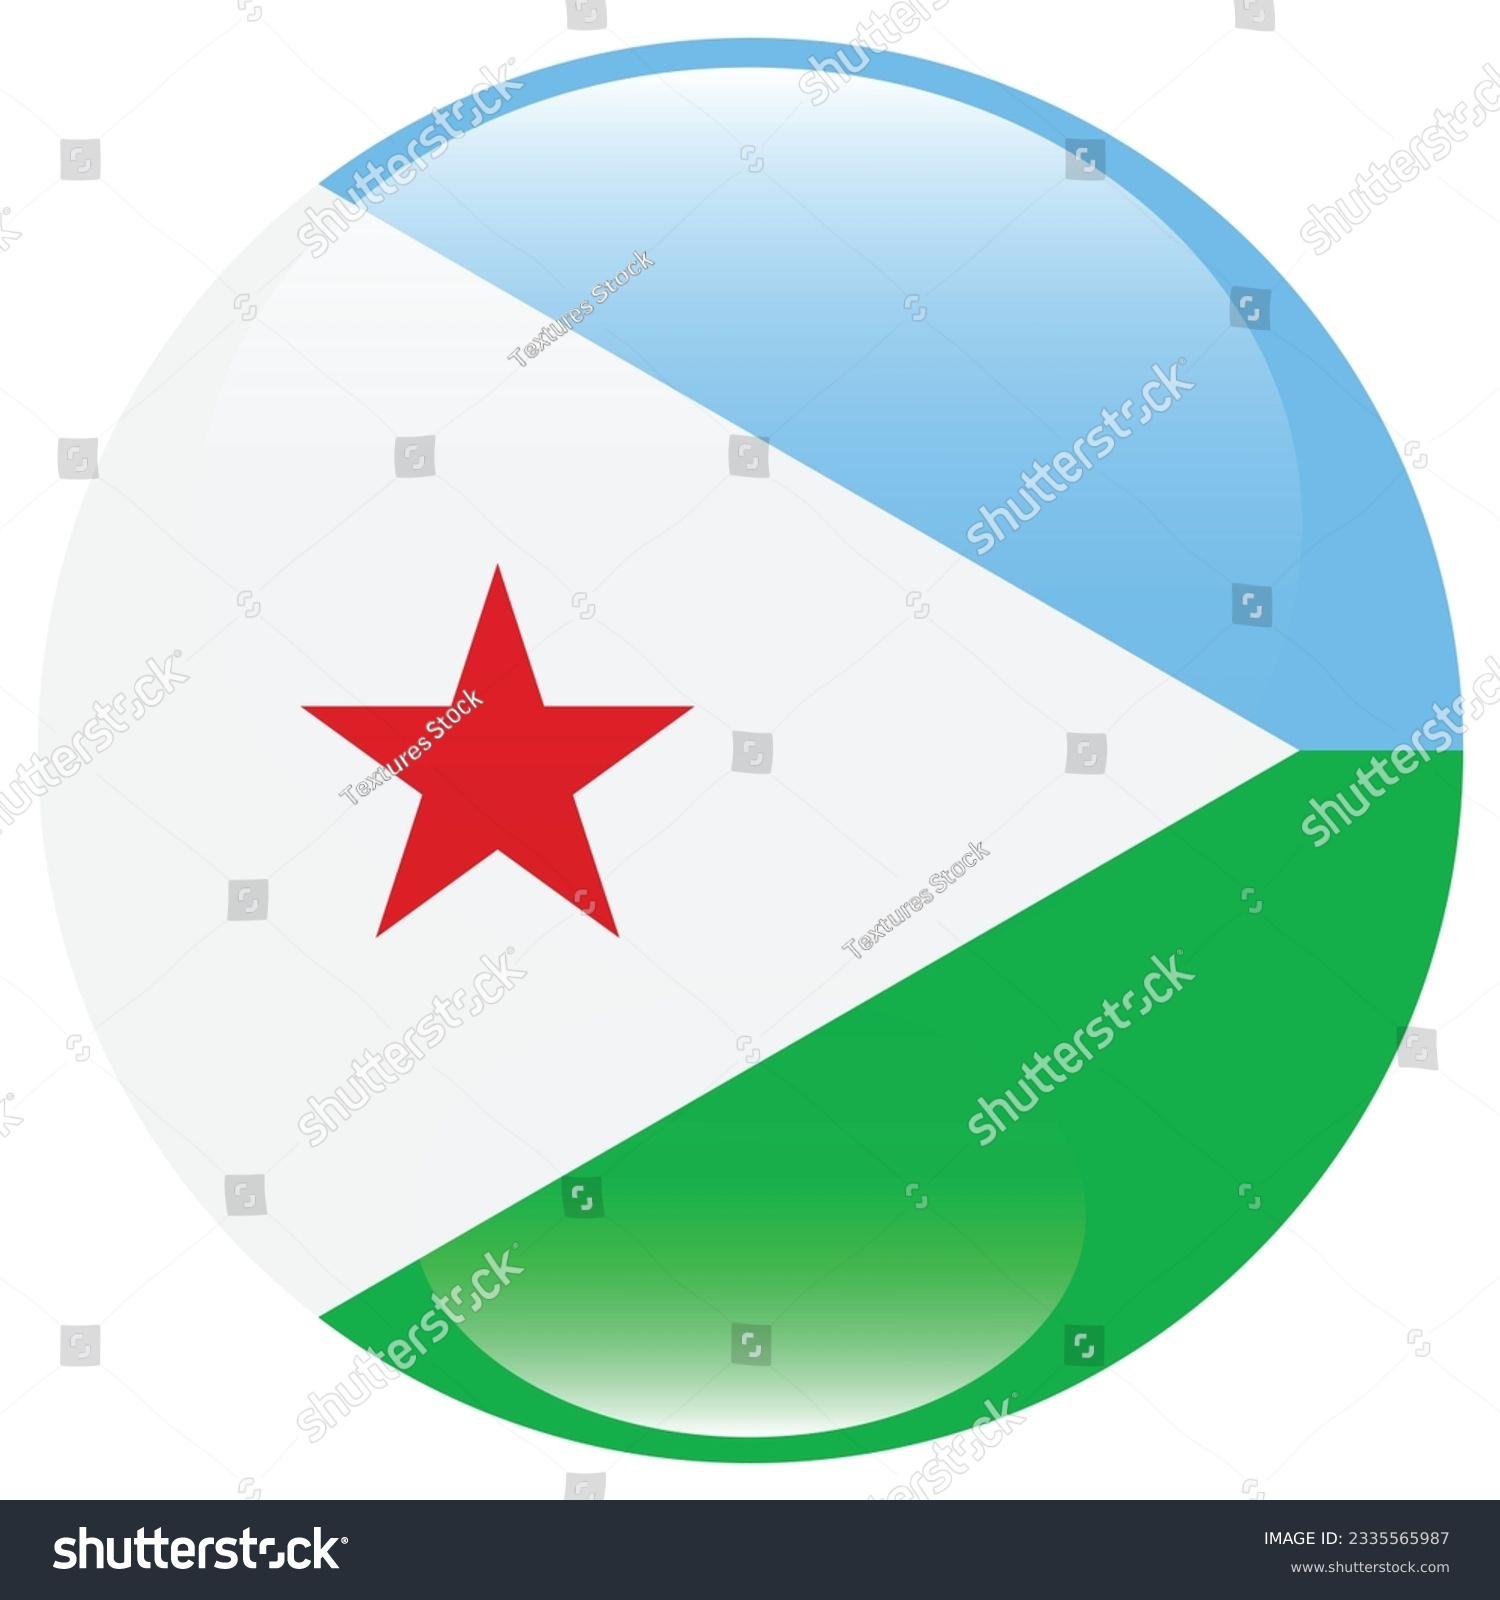 SVG of Flag of Djibouti. Flag icon. Standard color. Circle icon flag. 3d illustration. Computer illustration. Digital illustration. Vector illustration. svg